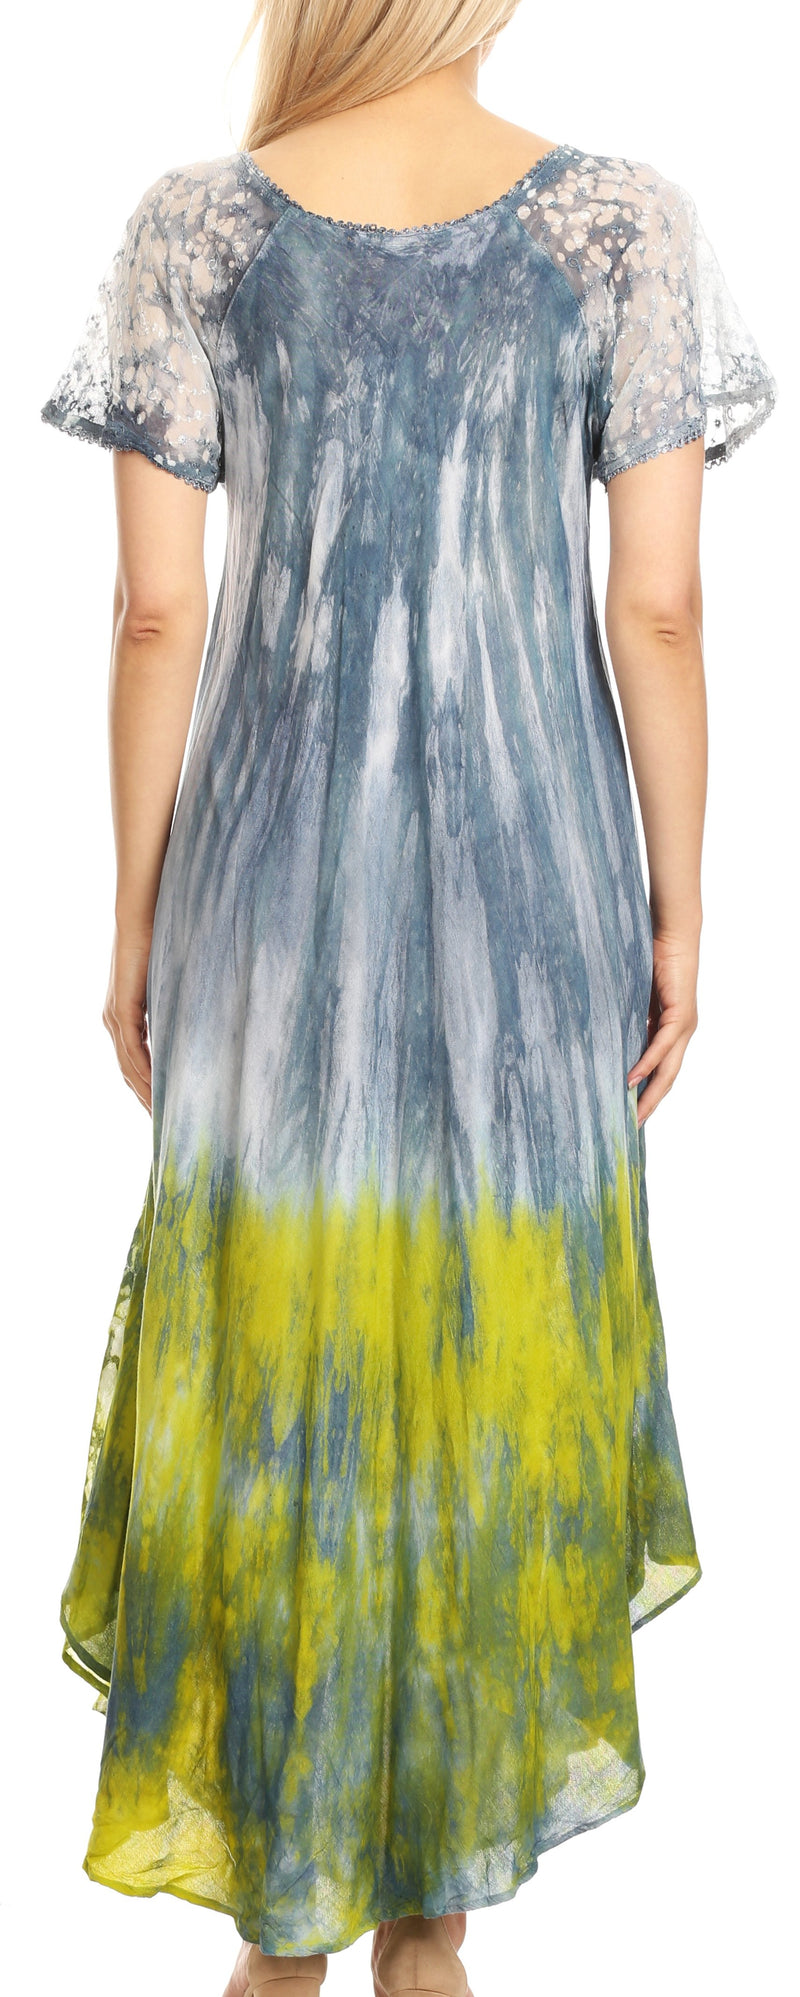 Sakkas Sofia Women's Flowy Summer Maxi Beach Dress Tie-dye w/Batik & Short Sleeves